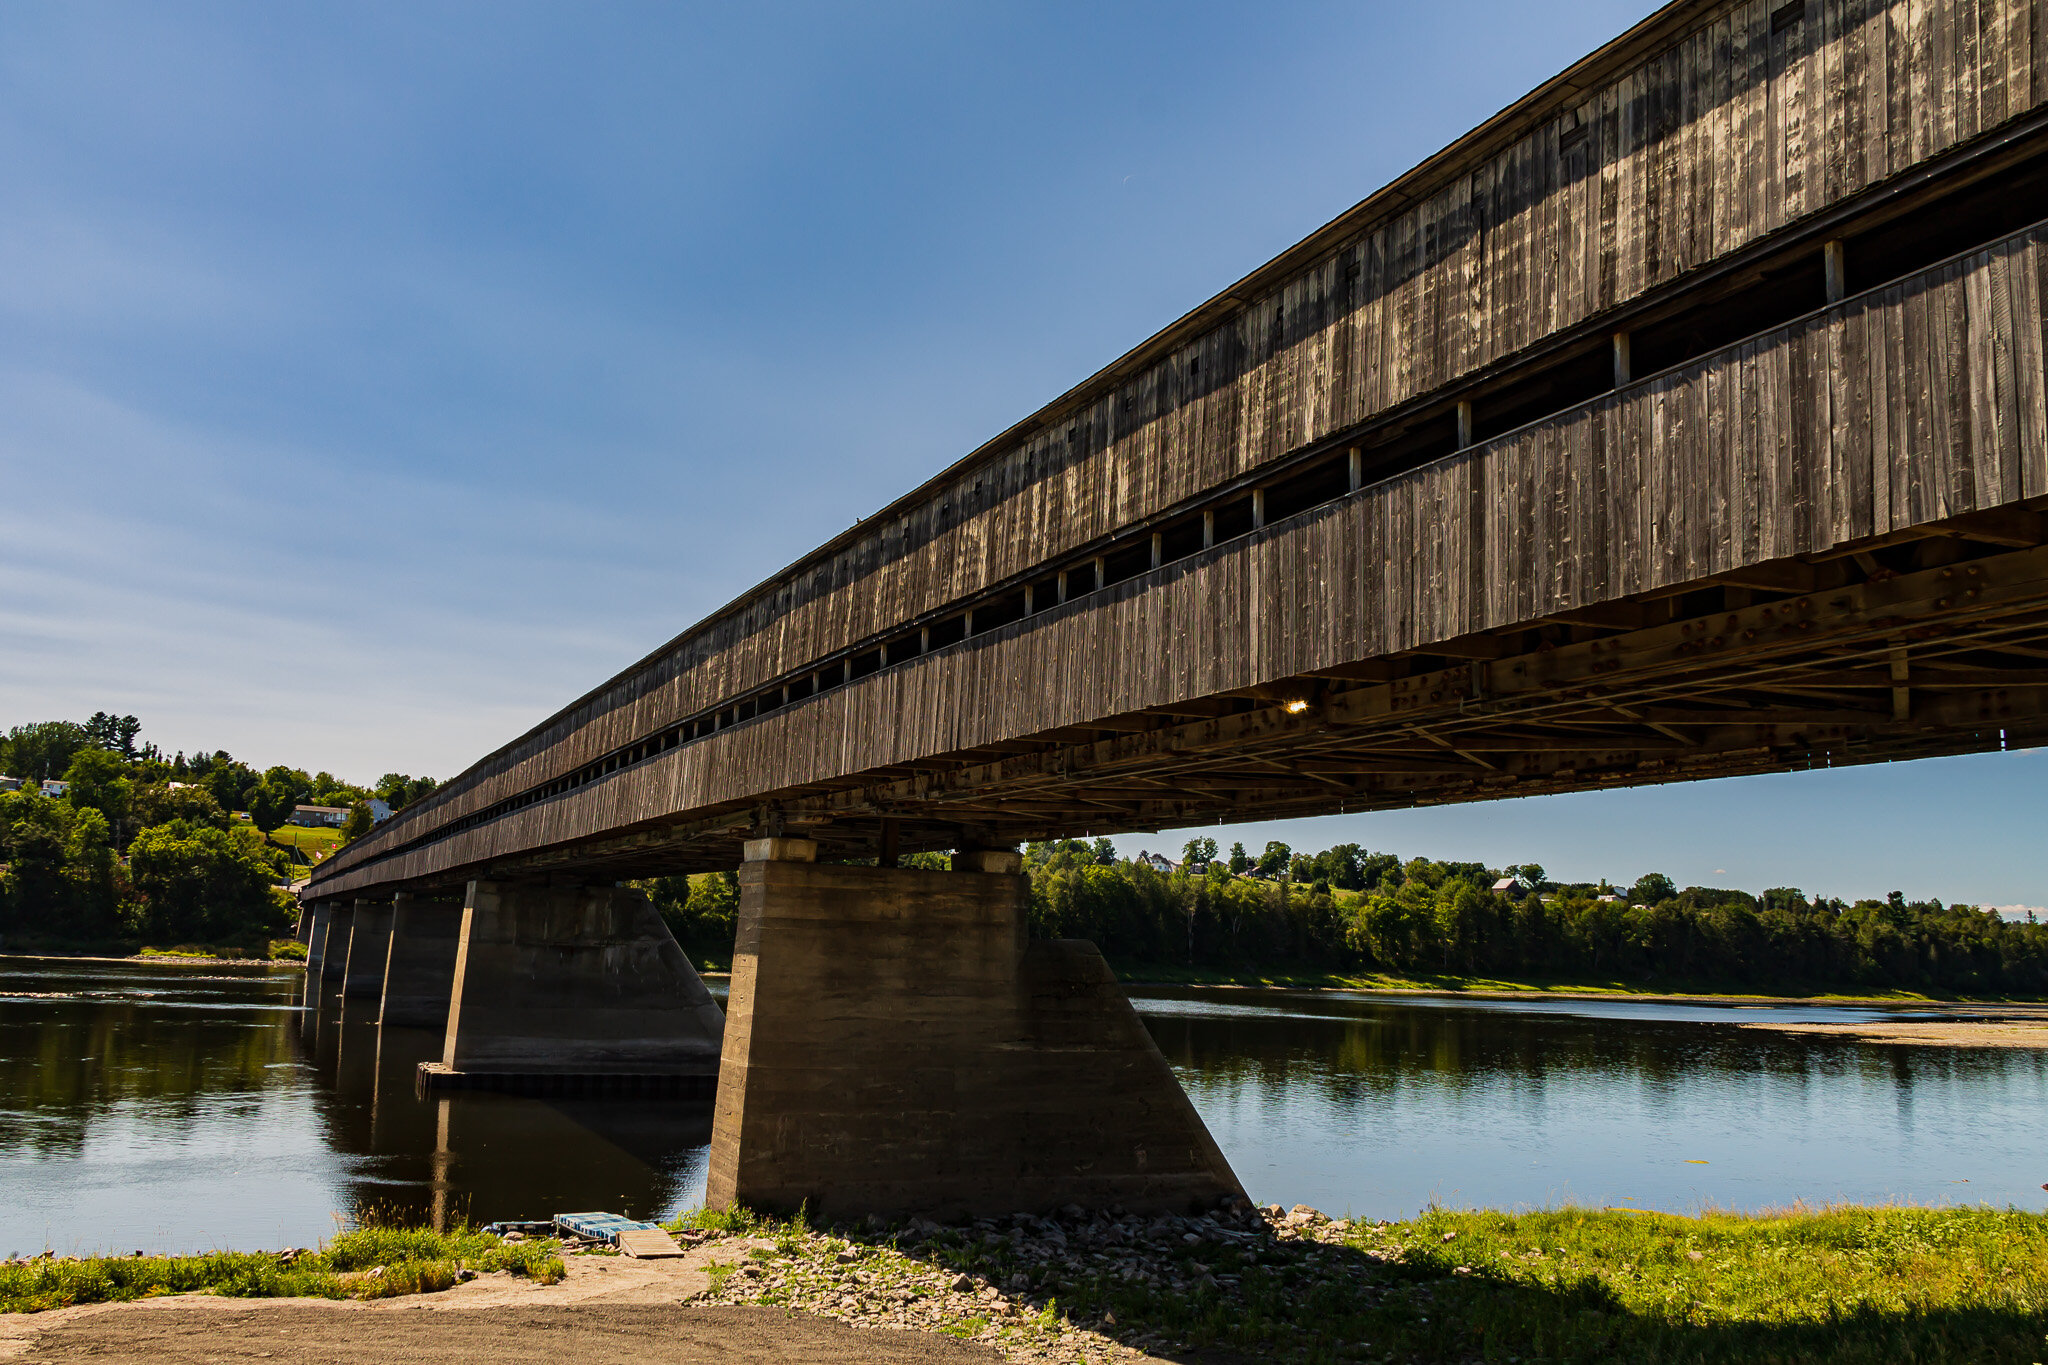 Leg 2: Hartland Longest Covered Bridge